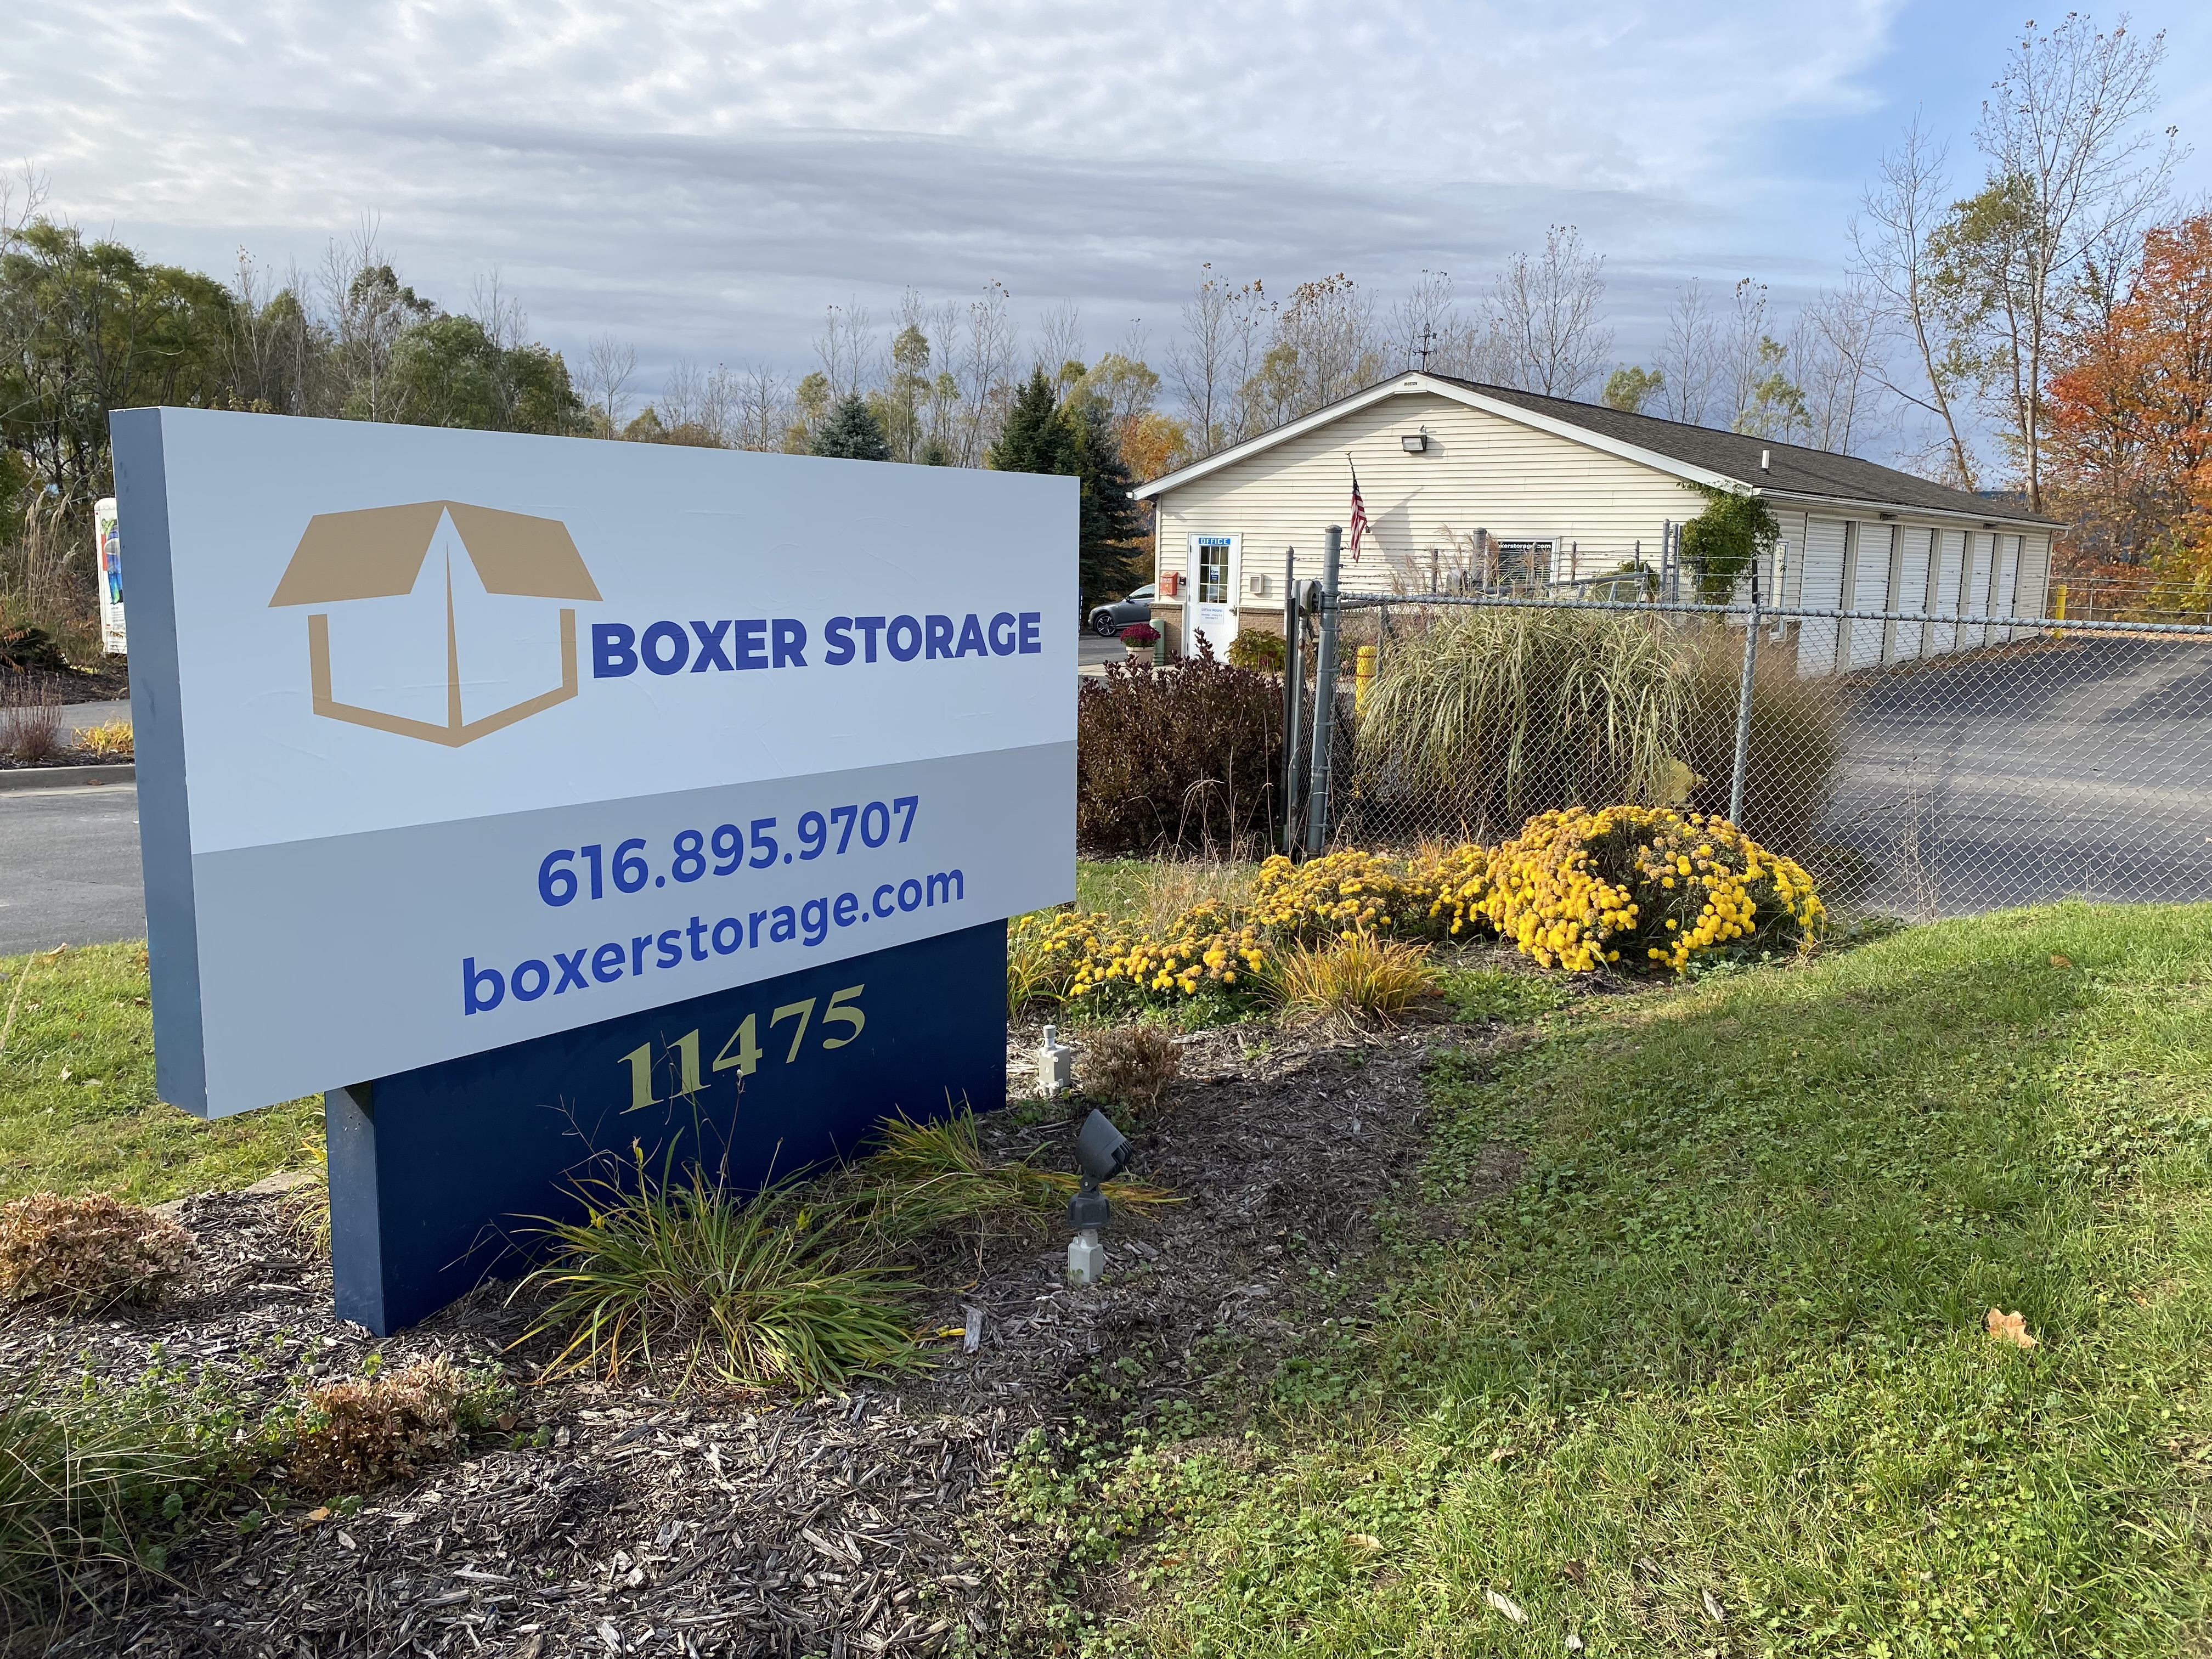 Boxer Storage - Allendale sign